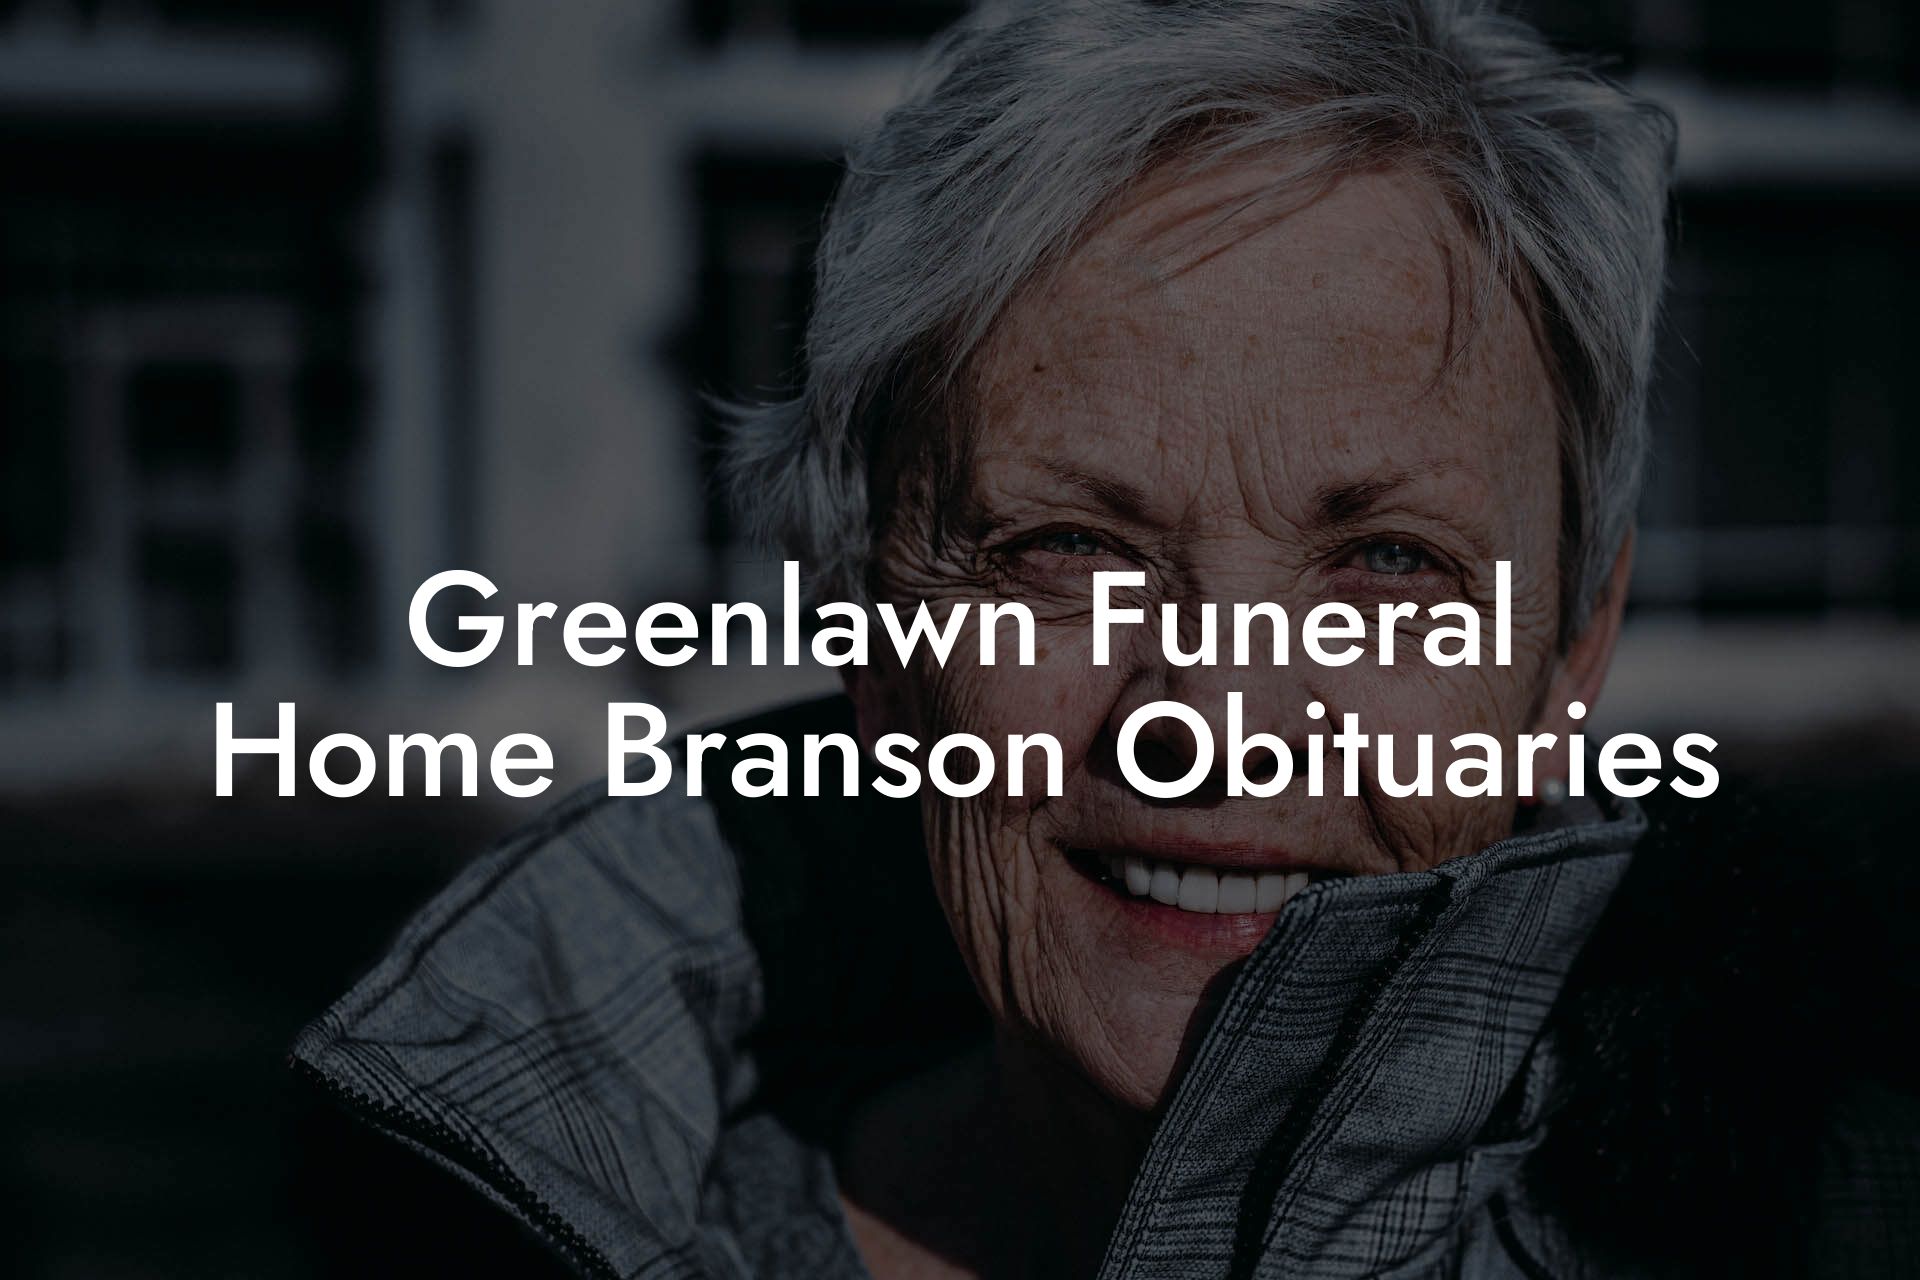 Greenlawn Funeral Home Branson Obituaries